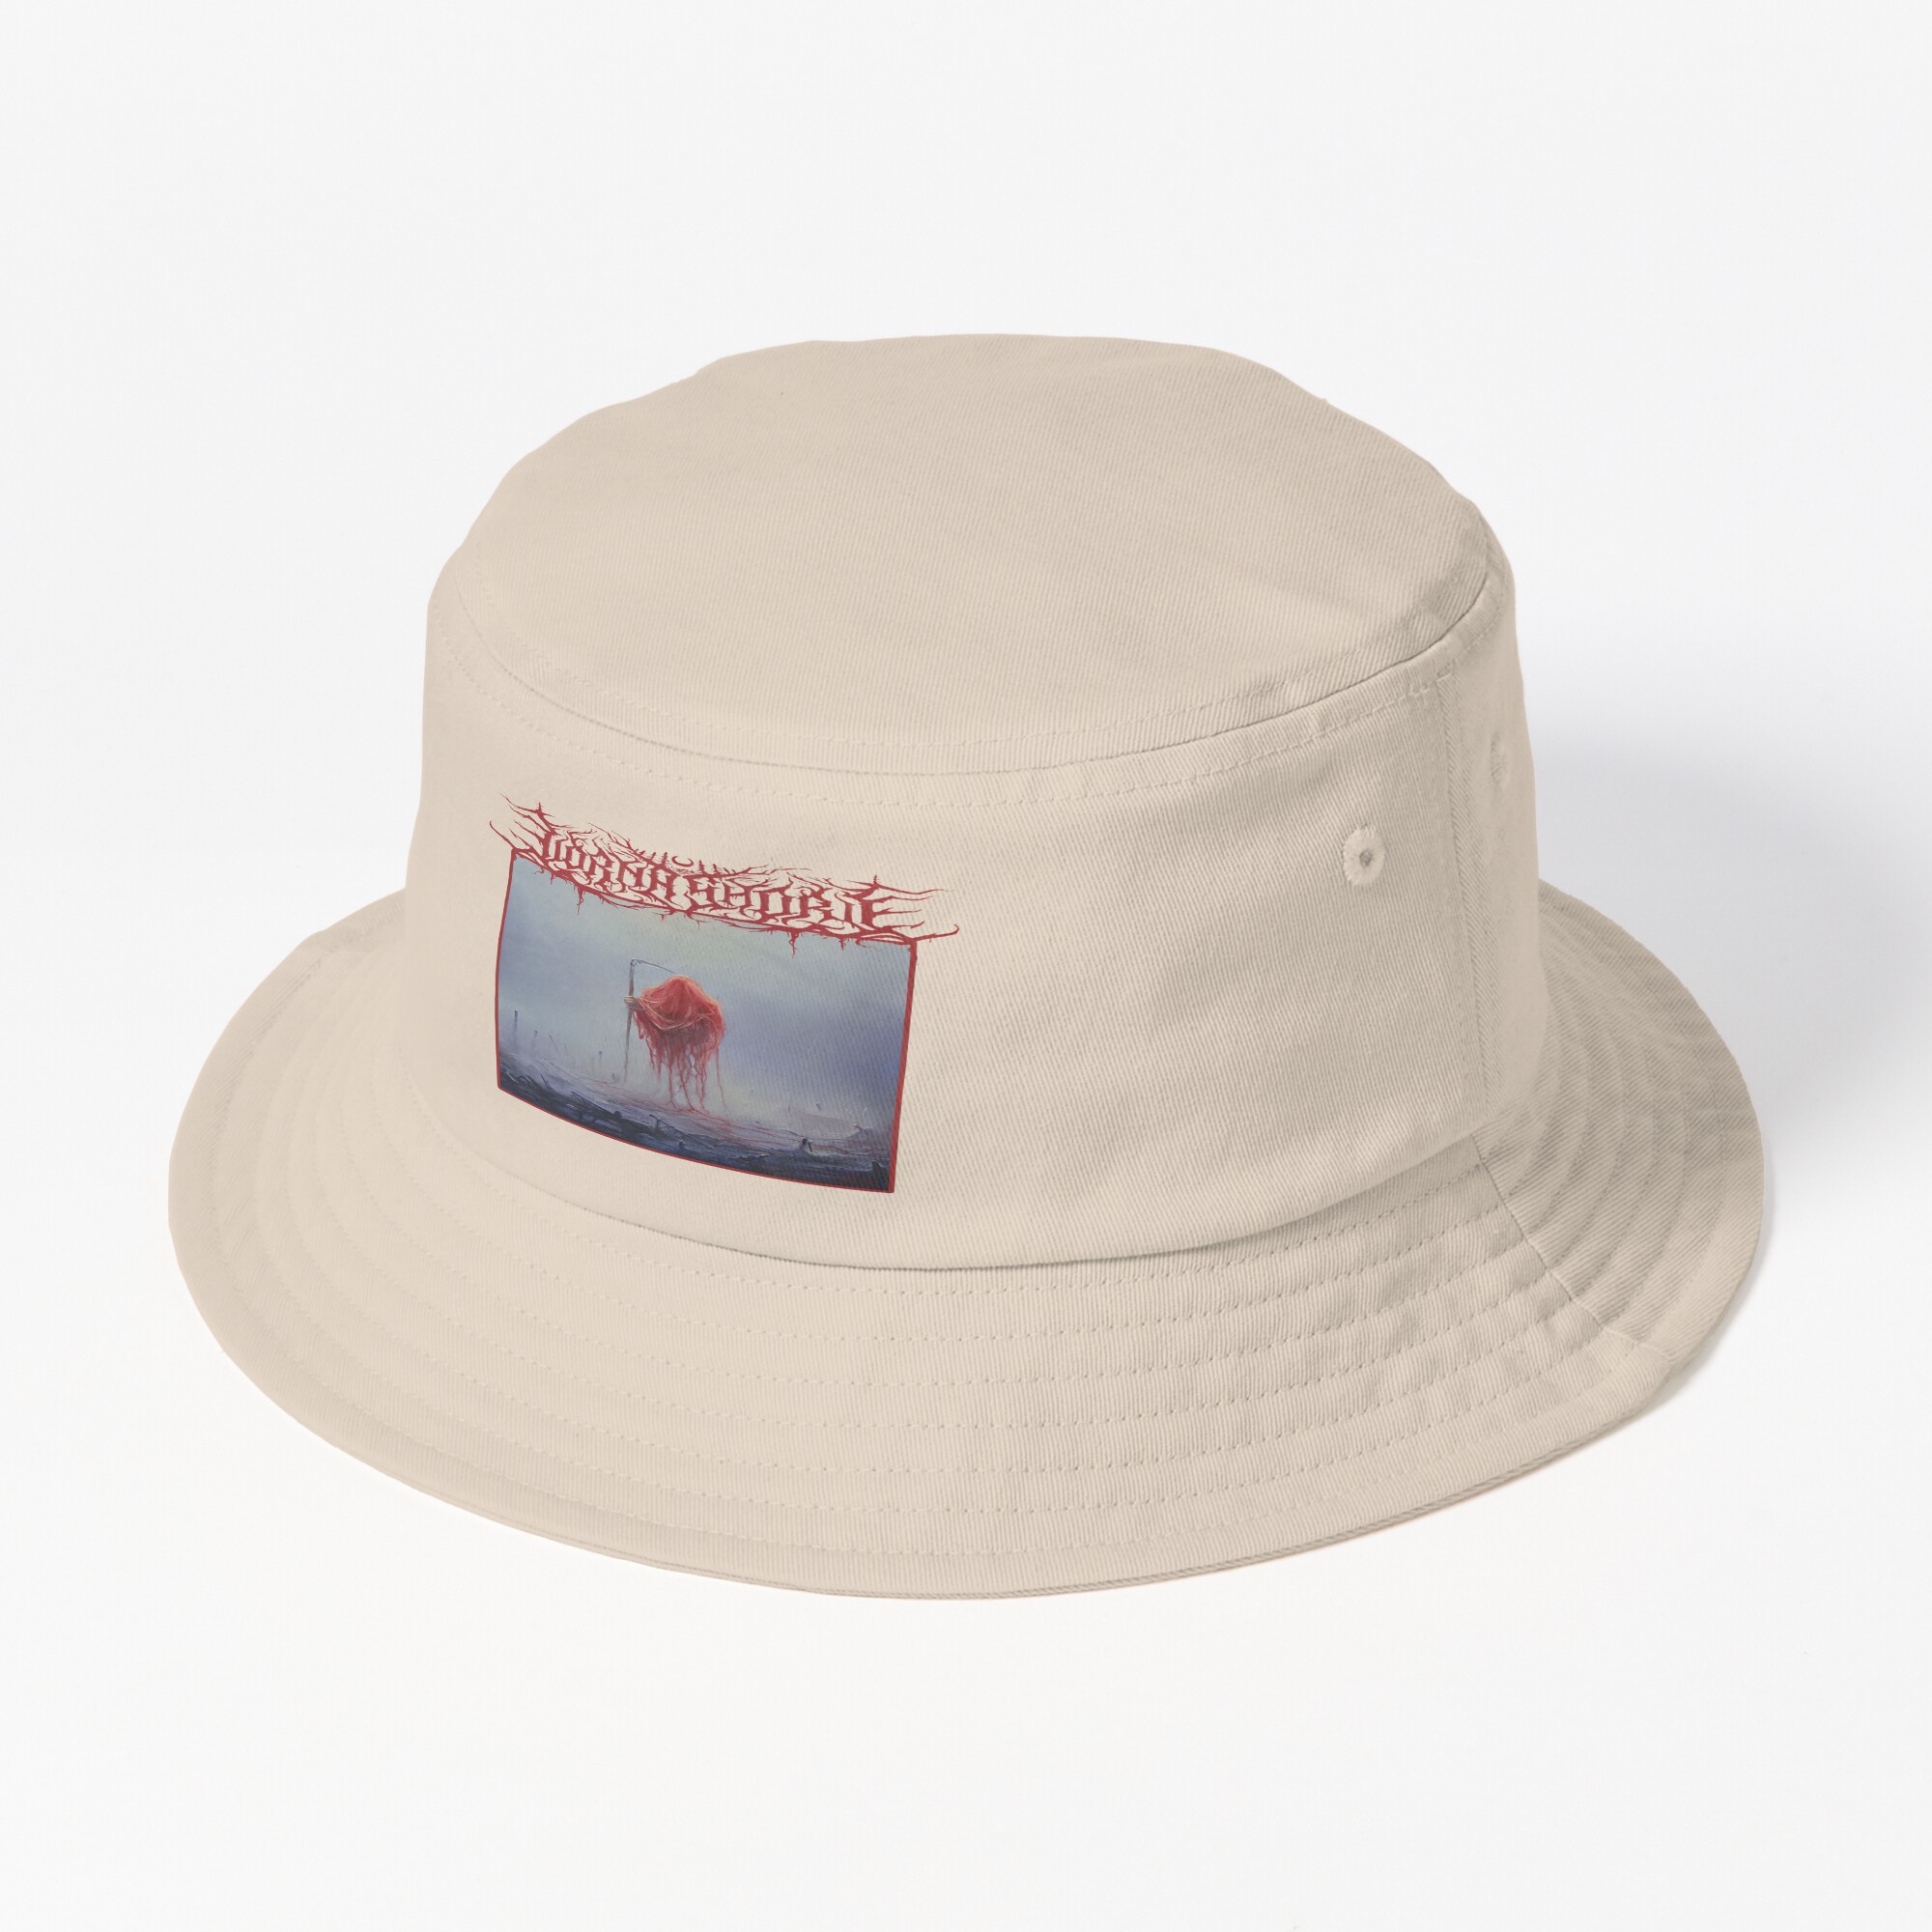 ssrcobucket hatproducte5d6c5f62bbf65eeprimarysquare2000x2000 bgf8f8f8 8 - Lorna Shore Shop